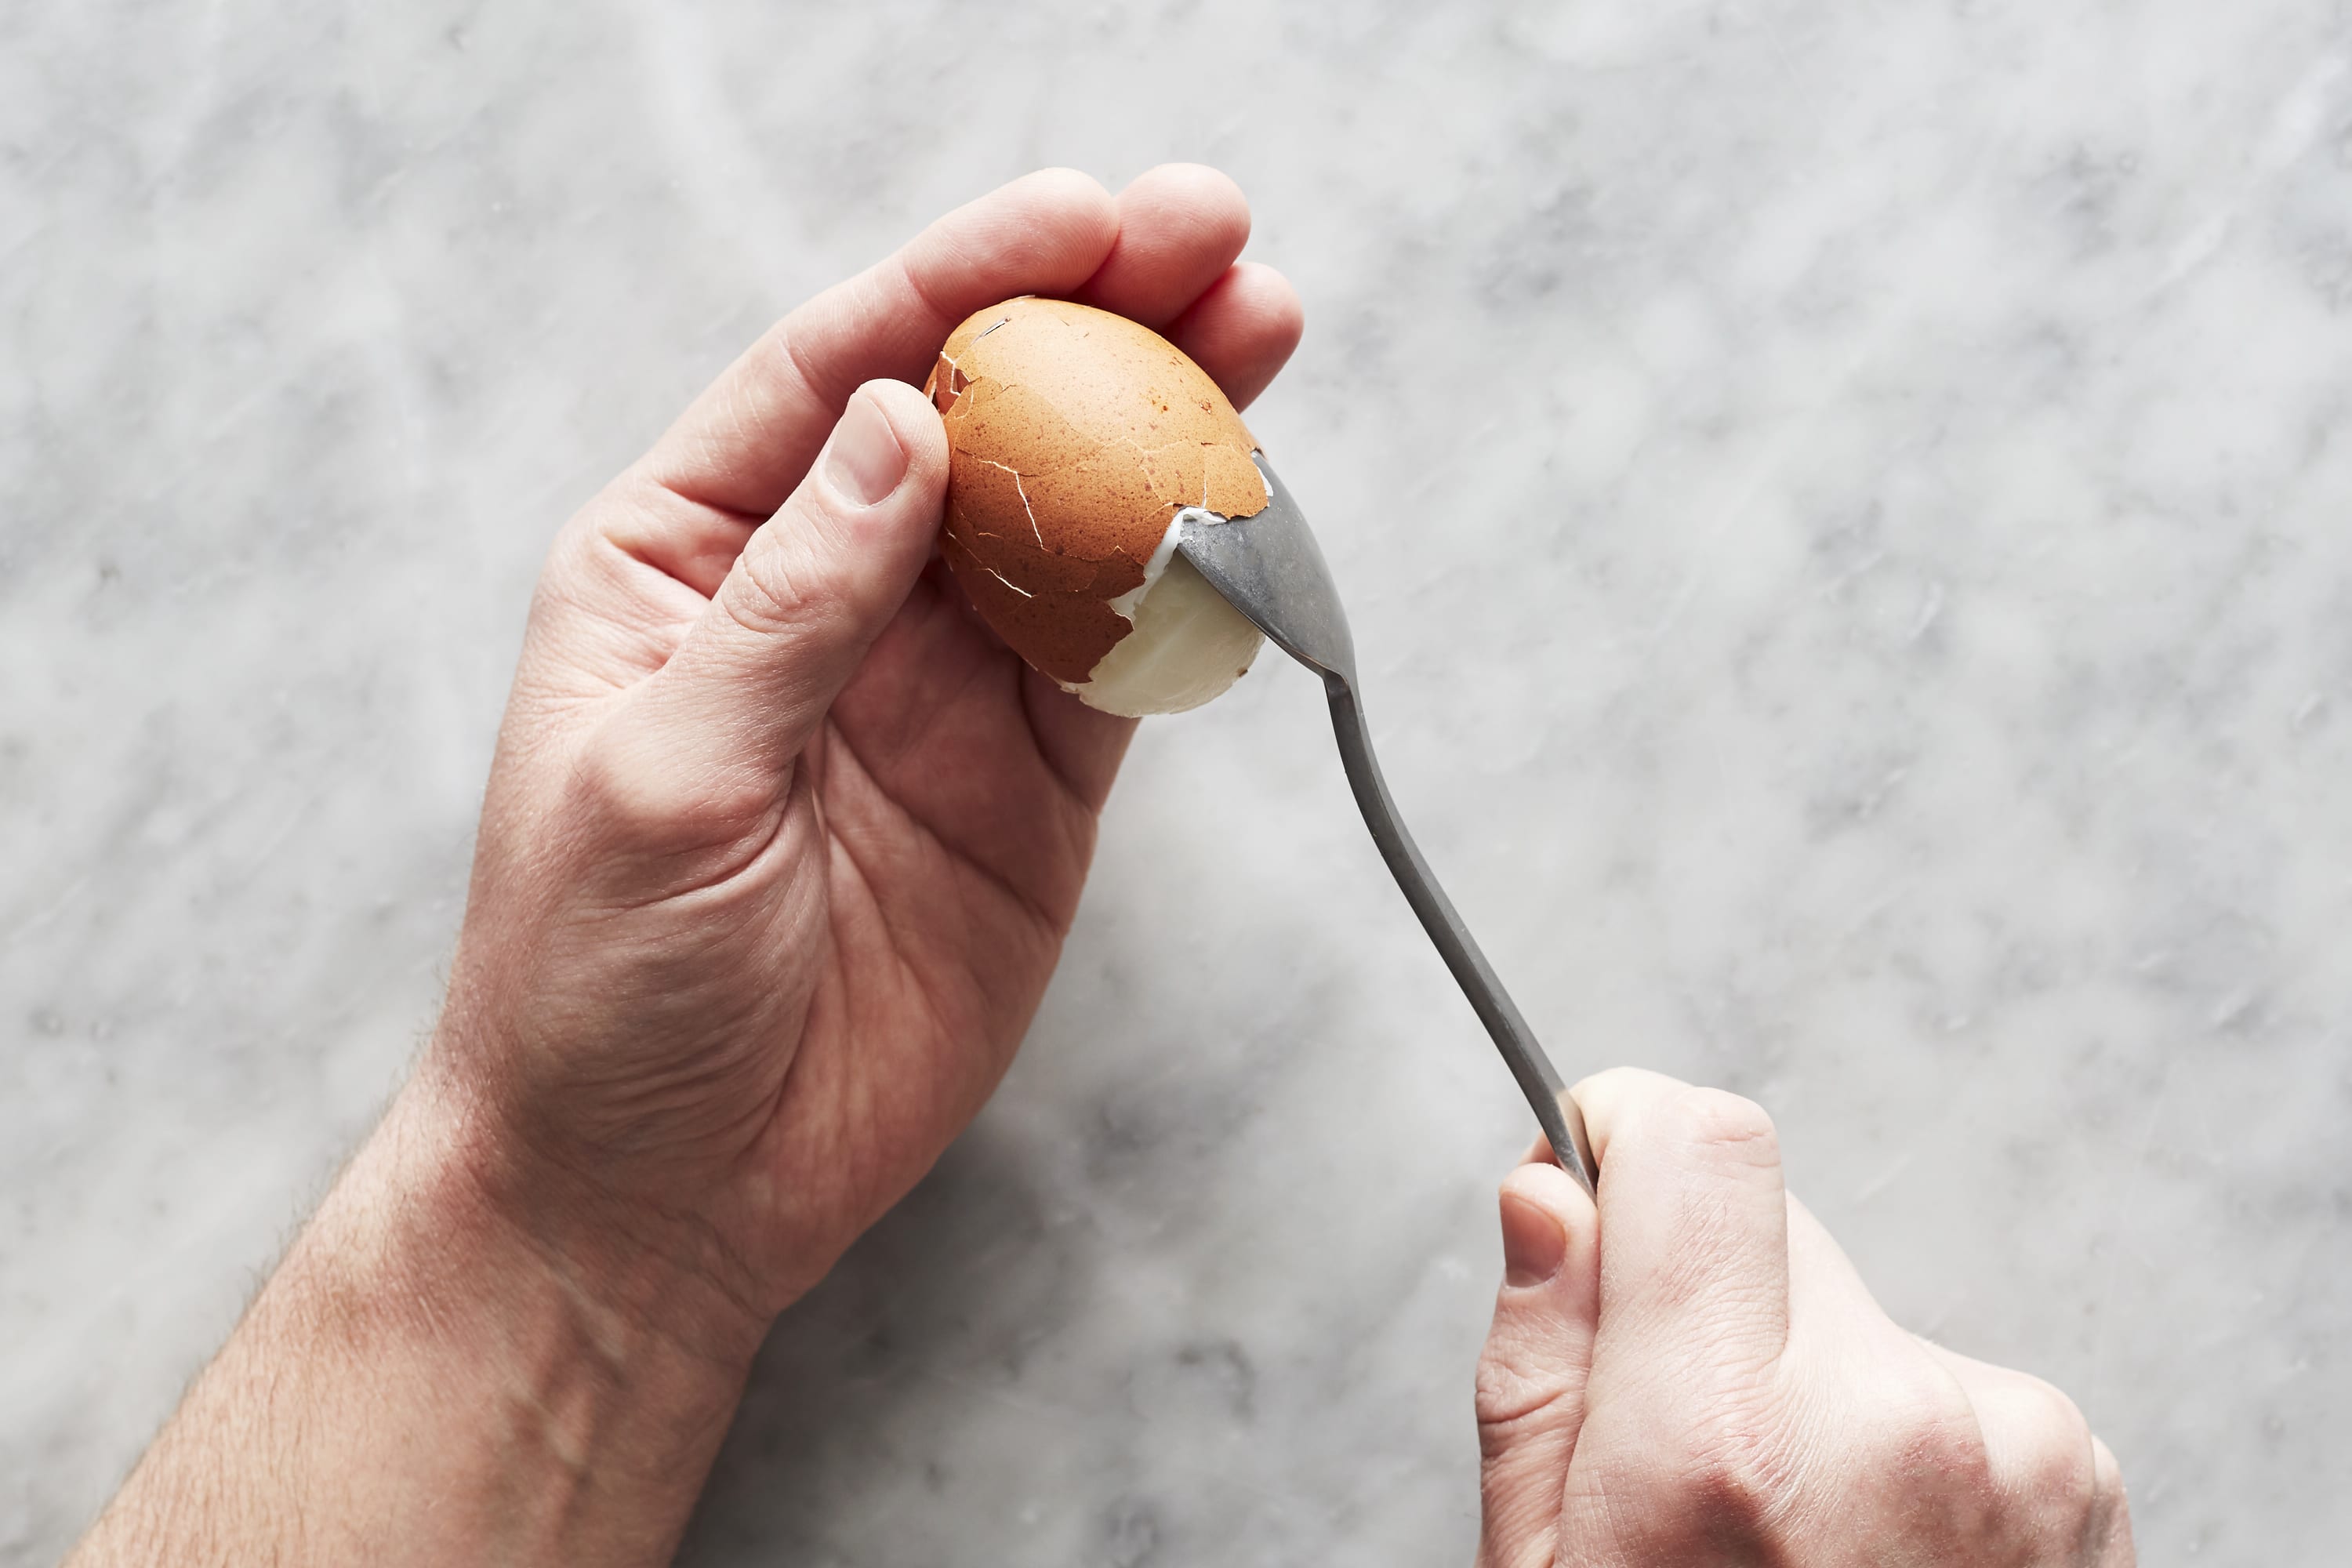 2020 Hot Manual Small Boiled Eggs Peeling Machine Eggs Peeler